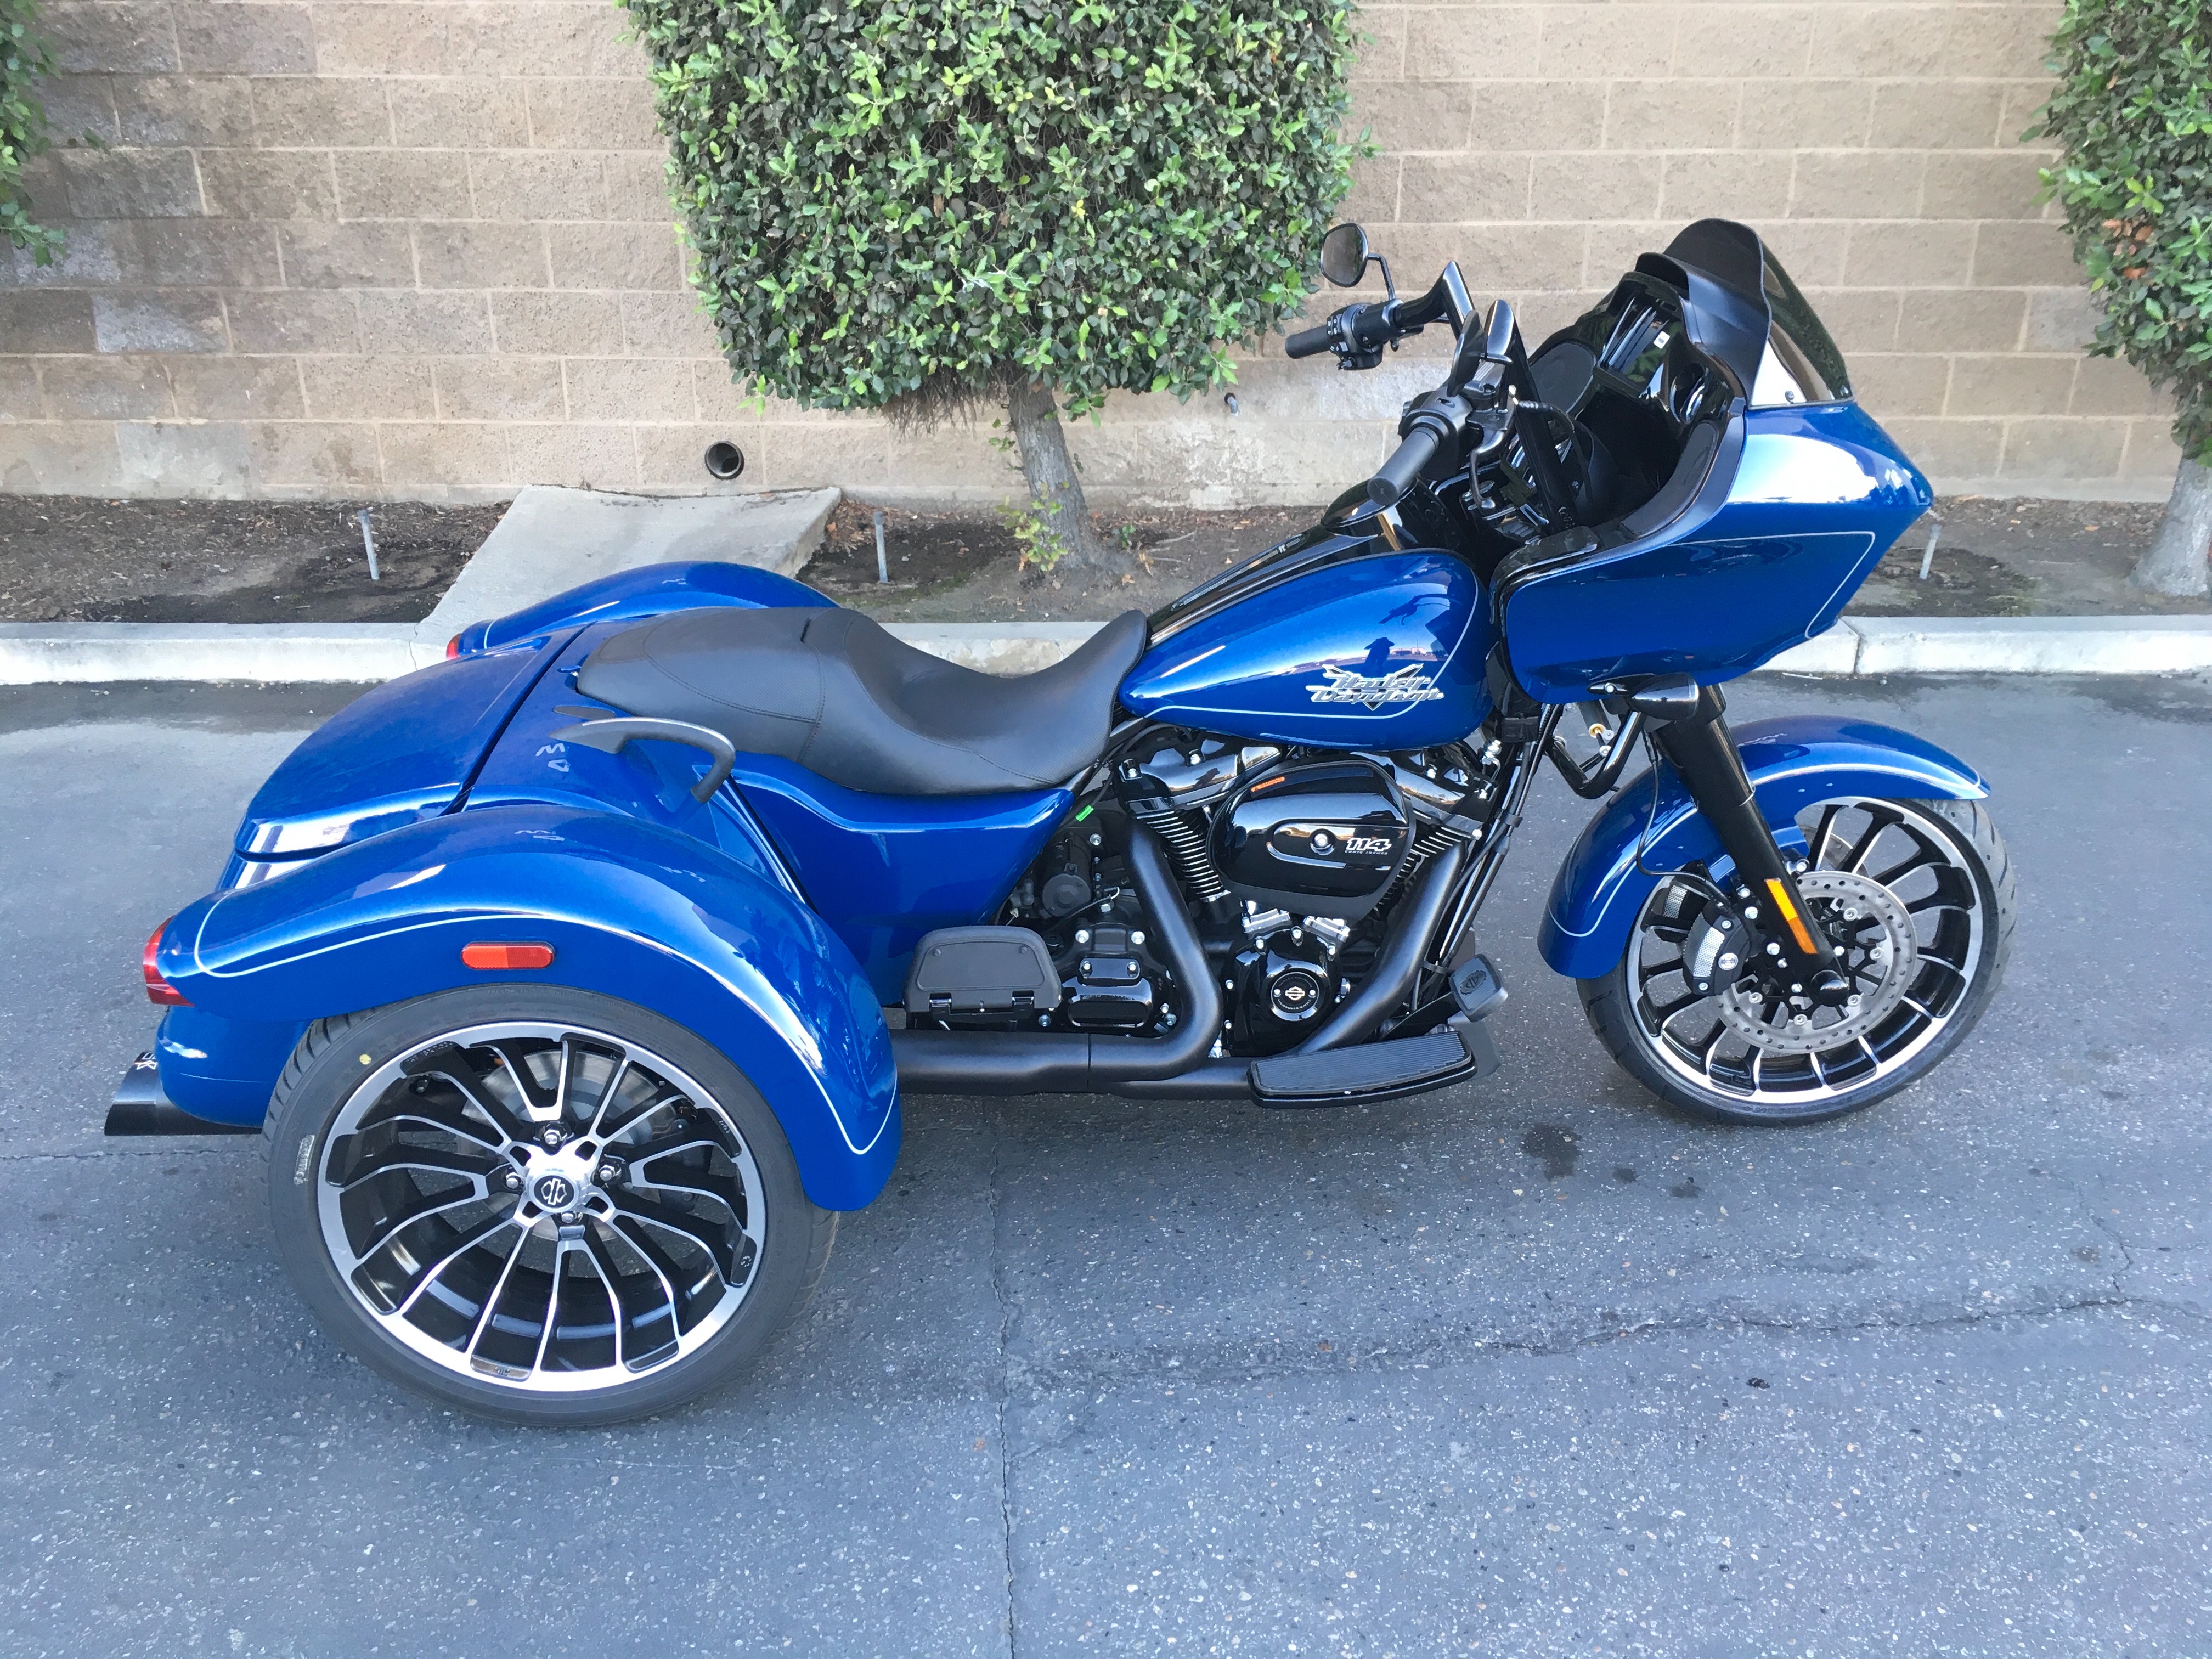 König 3,1 Gallonengasstank für Harley-Davidson – California Motorcycles